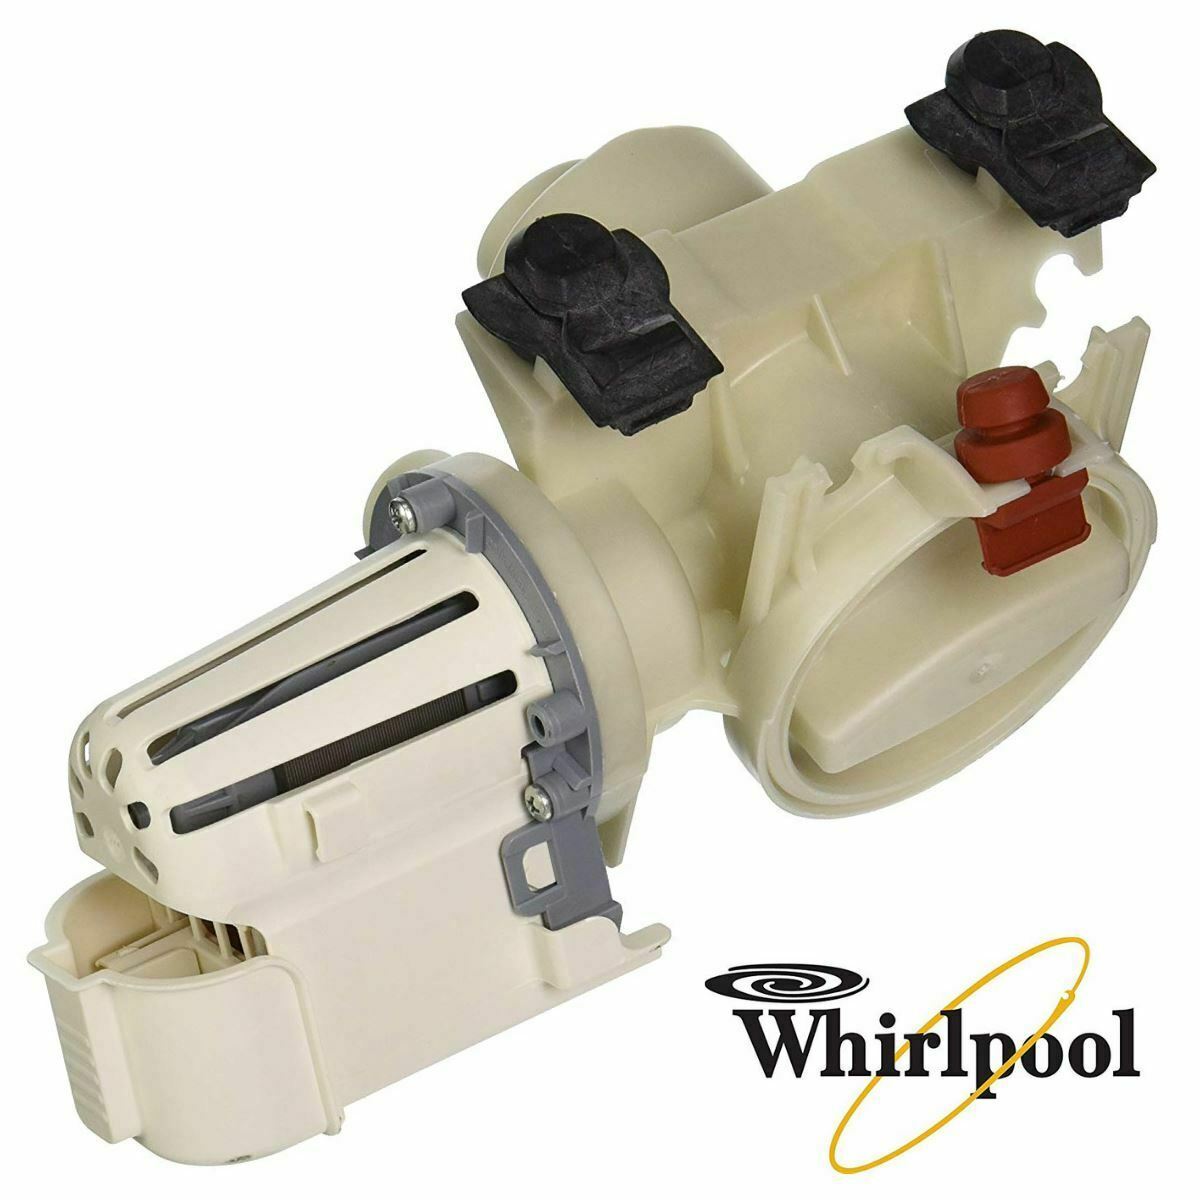 Whirlpool 280187 Washer Drain Pump fits Duet GHW9150PW0  GHW9100LW2 GHW9400PL0